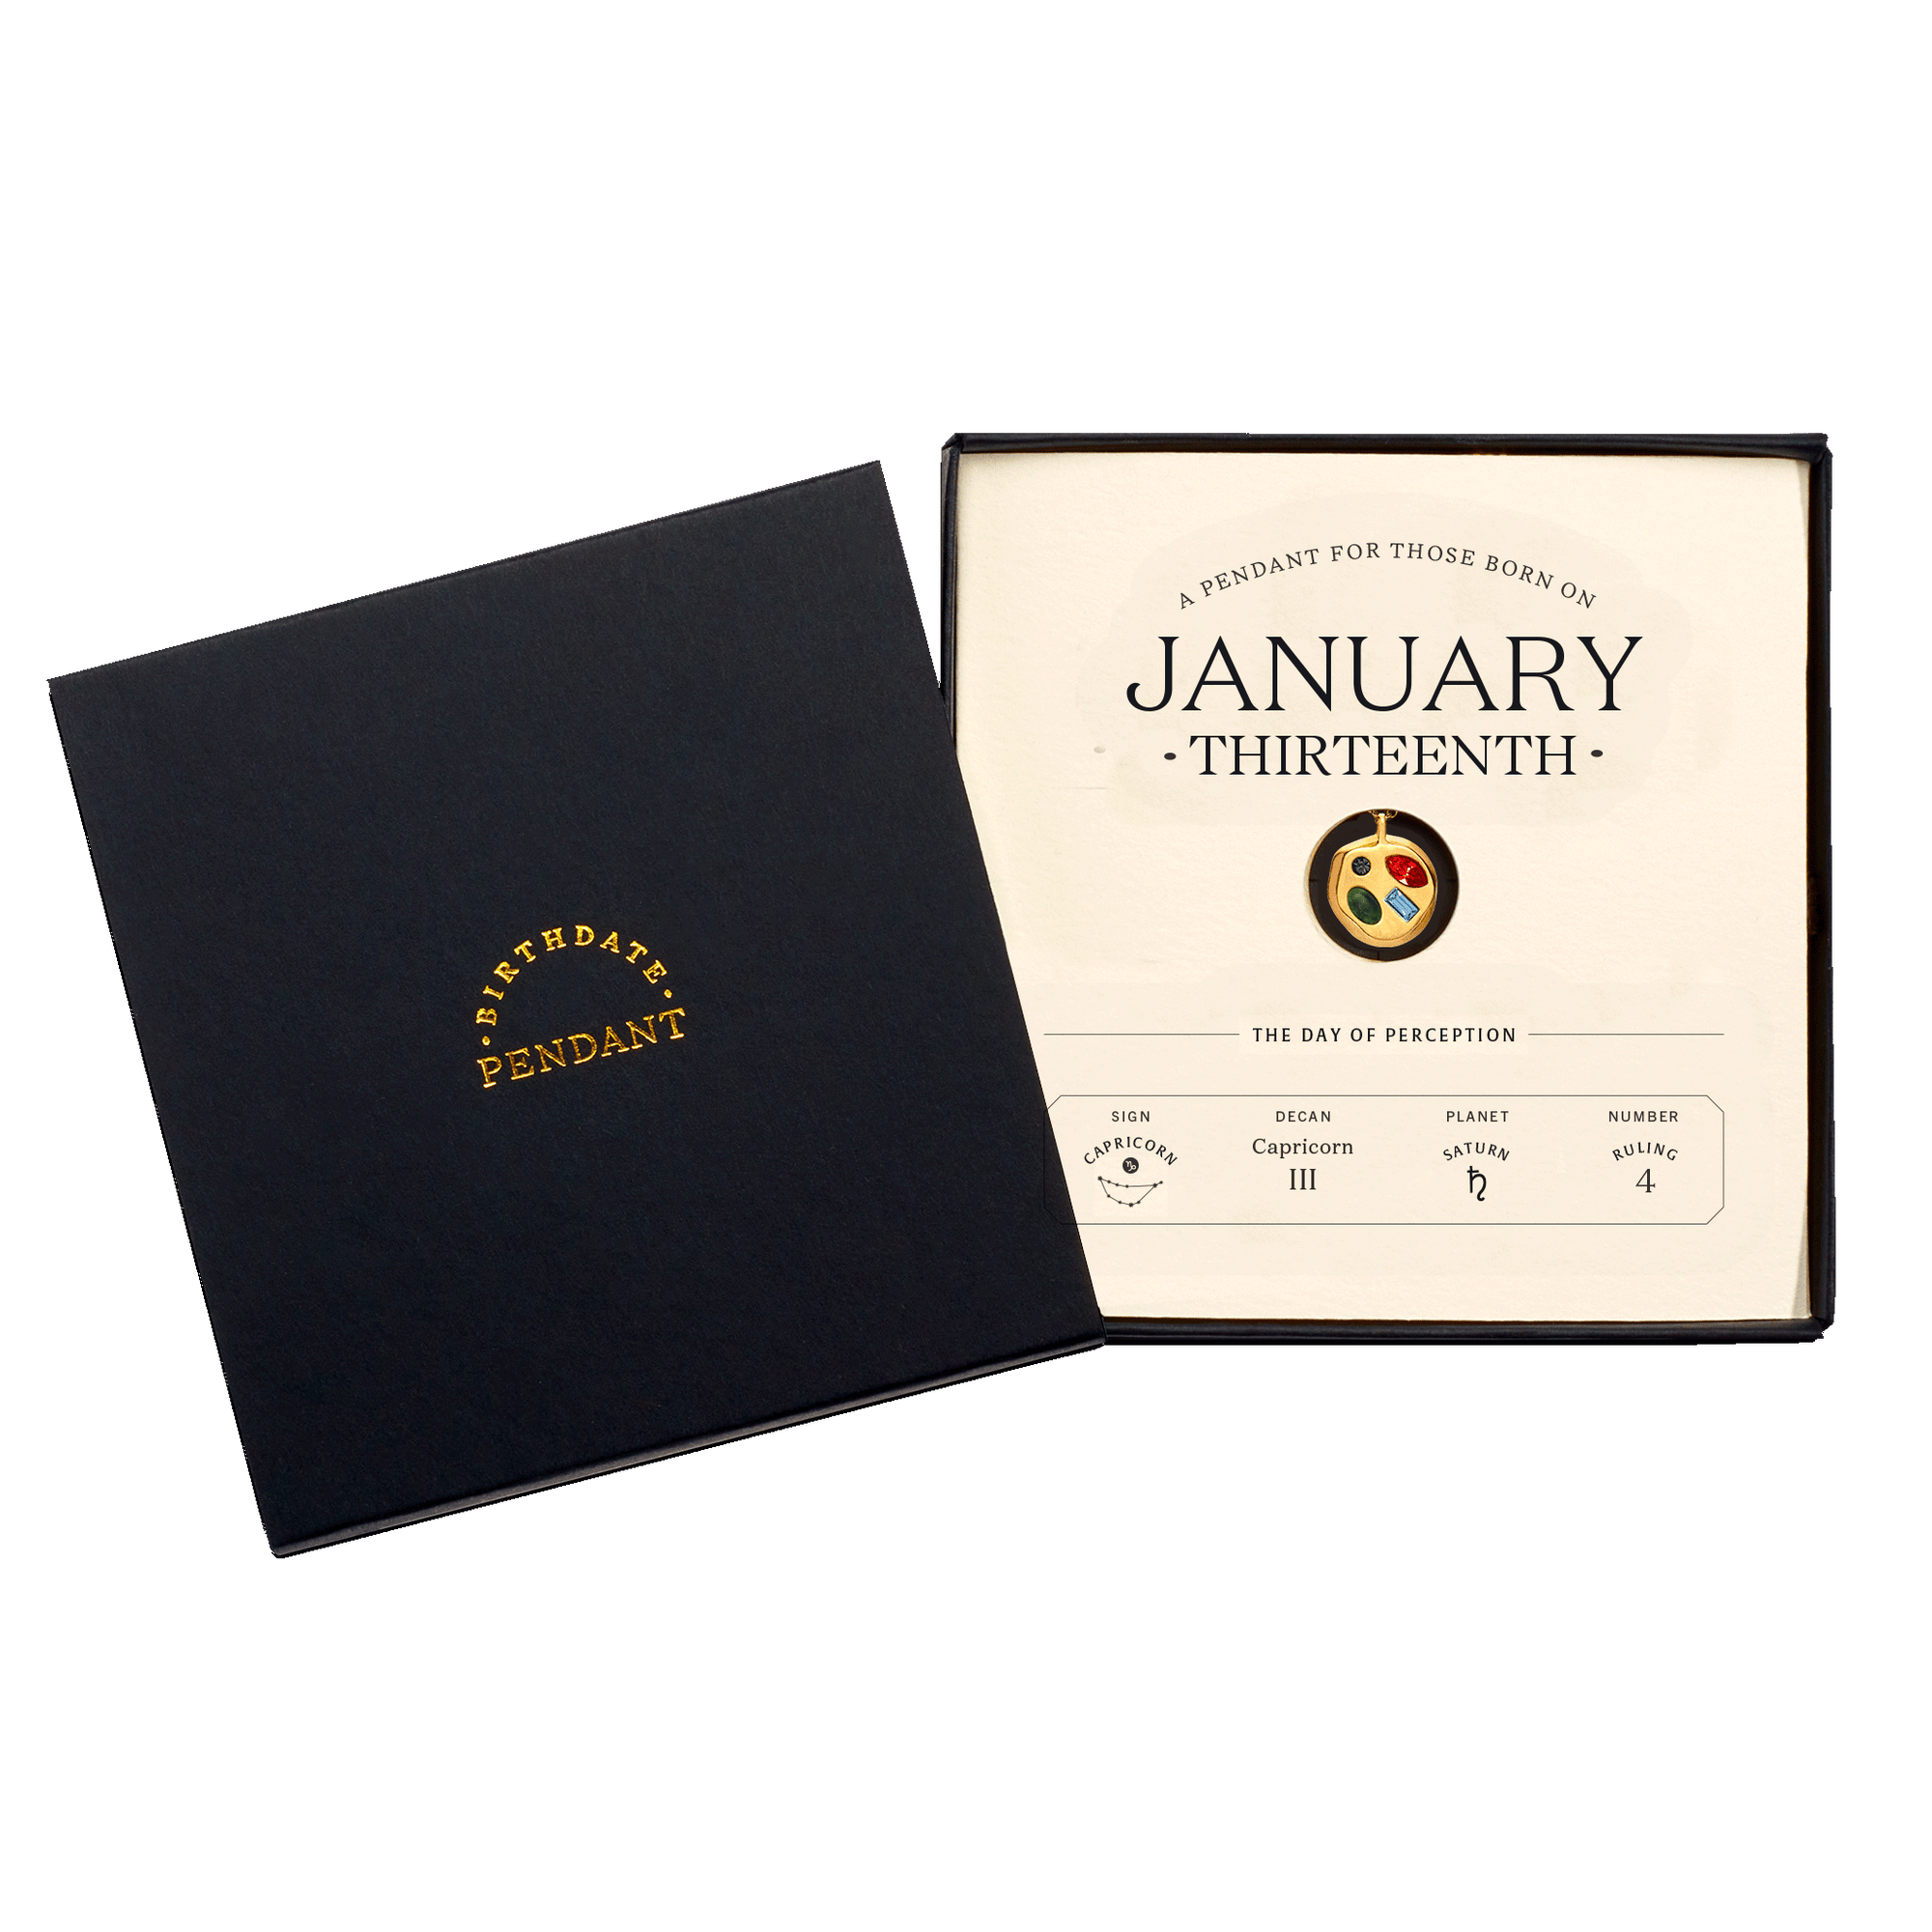 The January Thirteenth Pendant inside its box